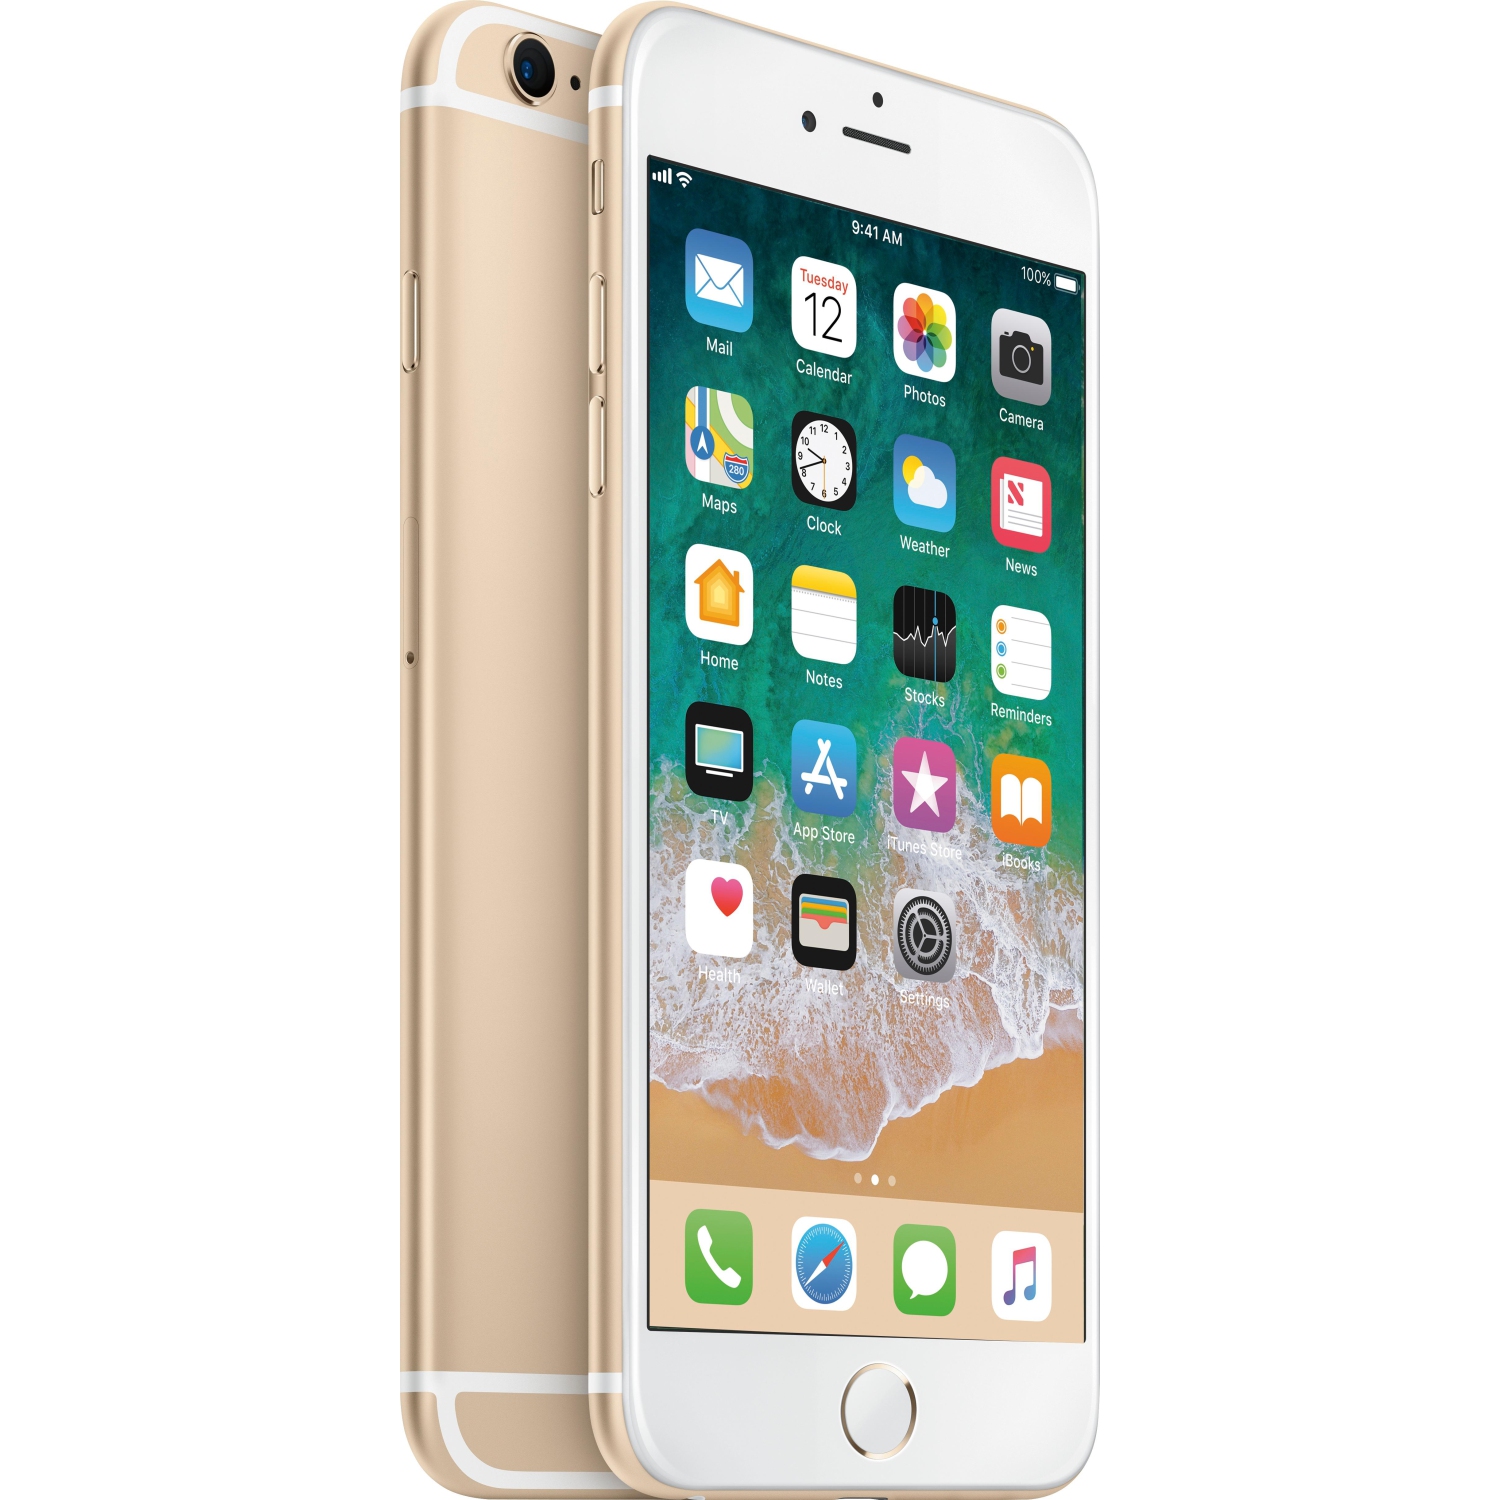 Refurbished (Good) - Apple iPhone 6s Plus 32GB Smartphone - Gold - Unlocked